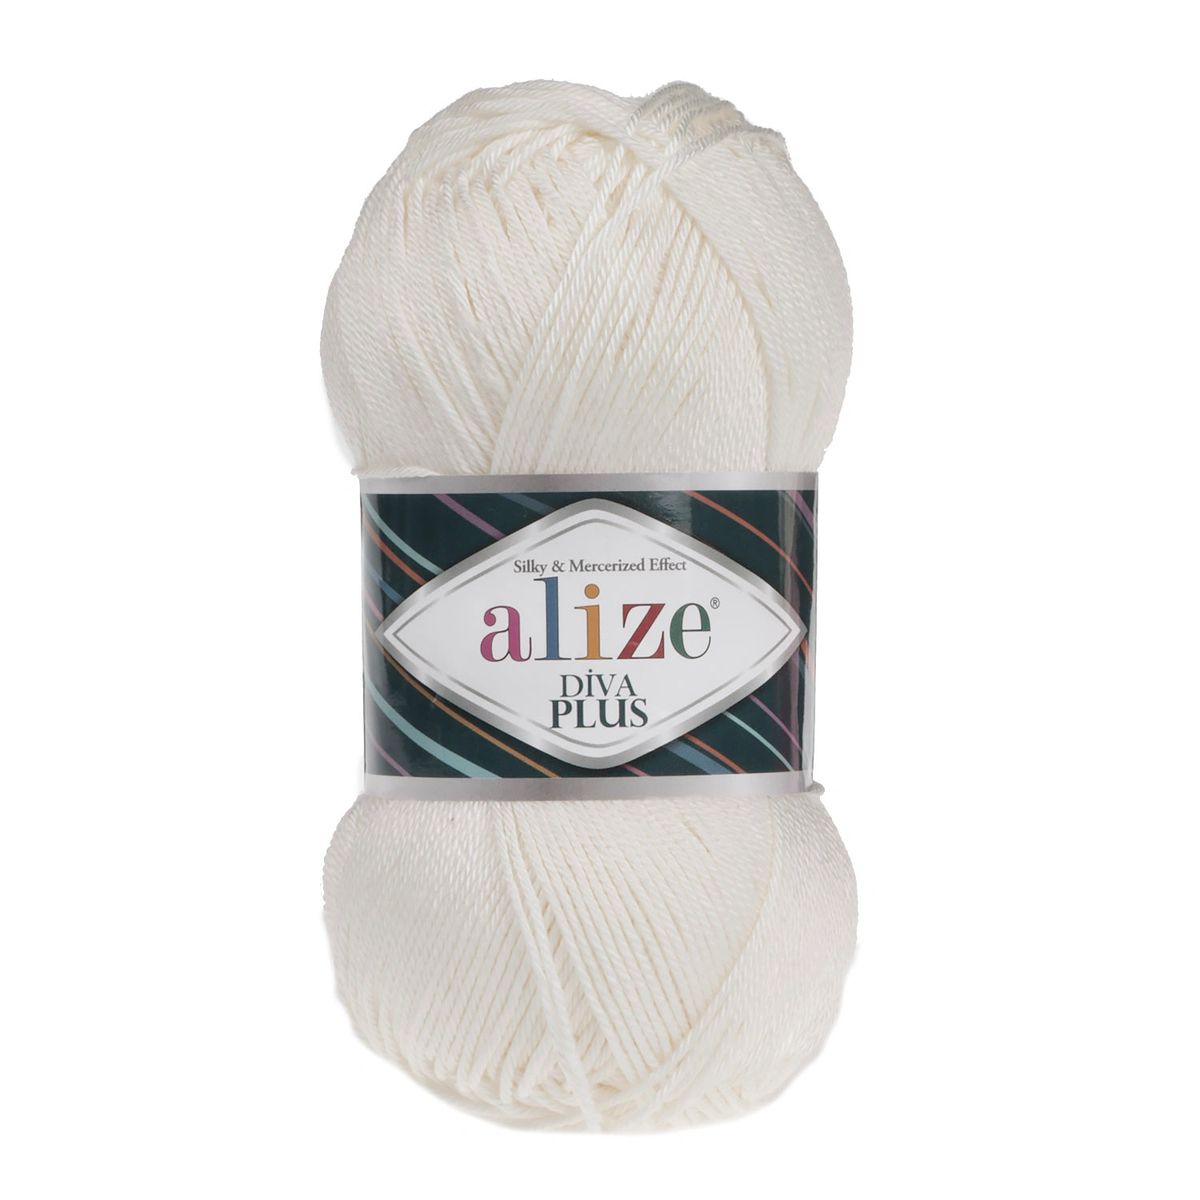 Alize Diva Plus,microfiber acrylic, silky , 100g, DK, colour 62 light cream